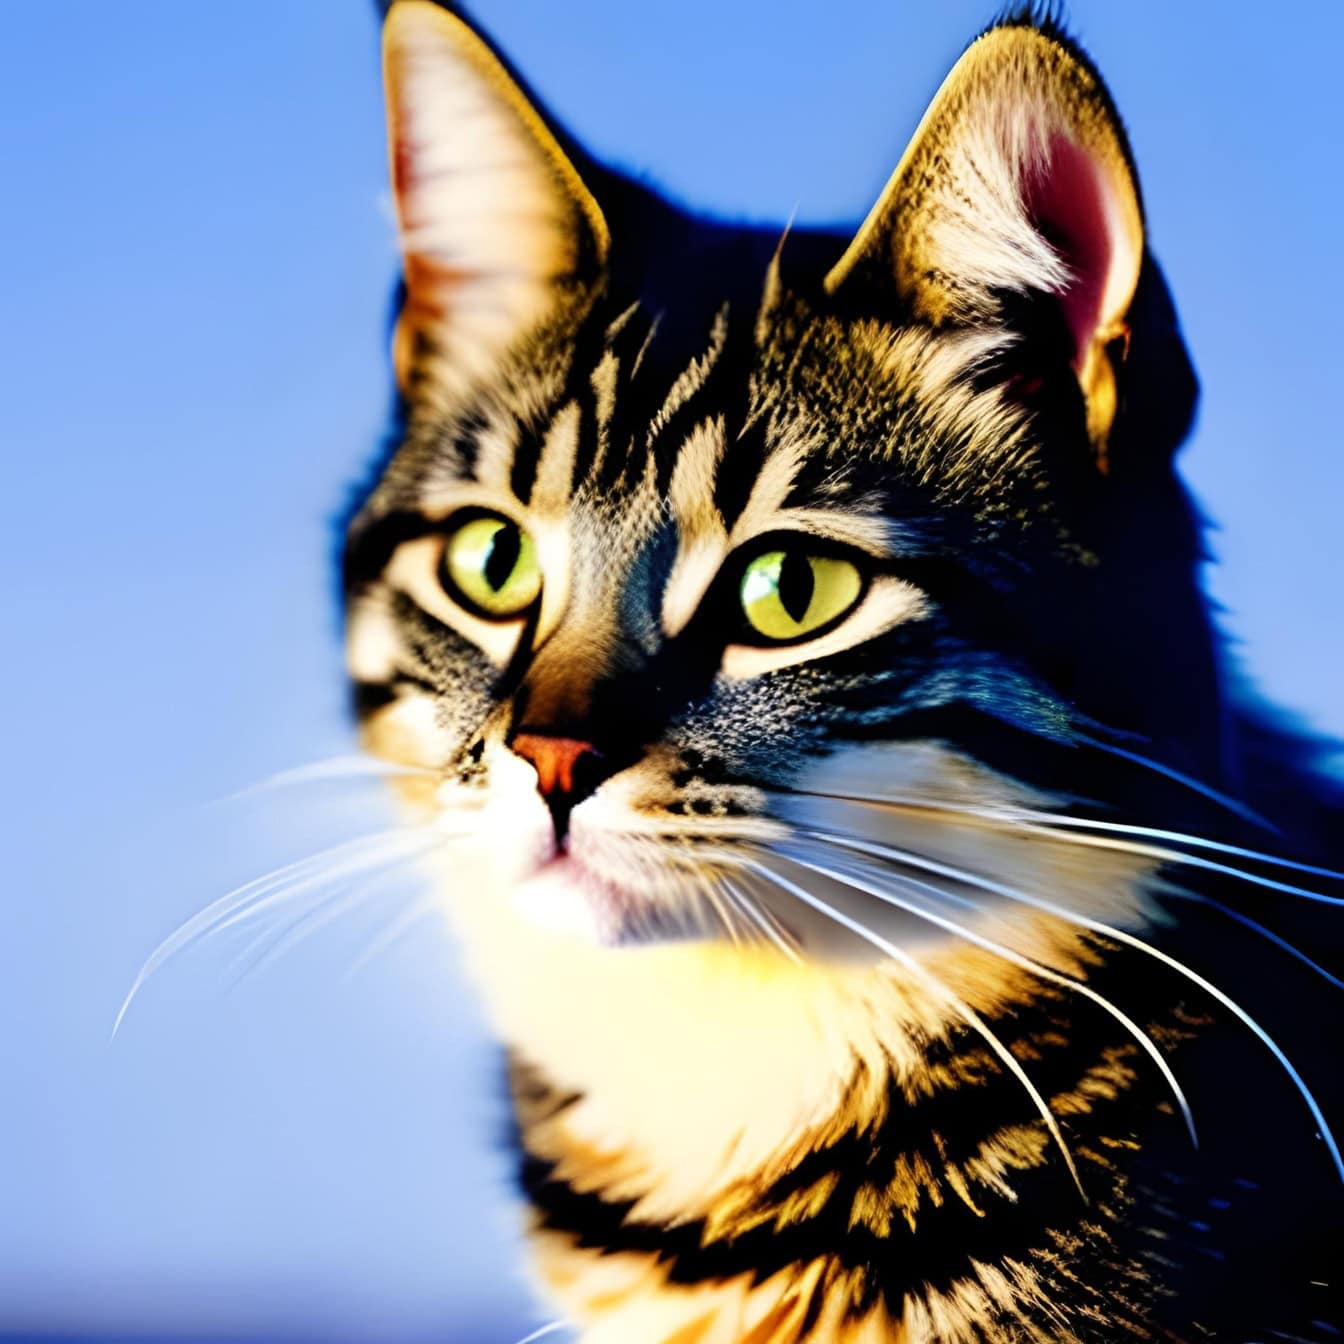 Gráfico de un adorable gatito con ojos de color amarillo verdoso sobre fondo azul